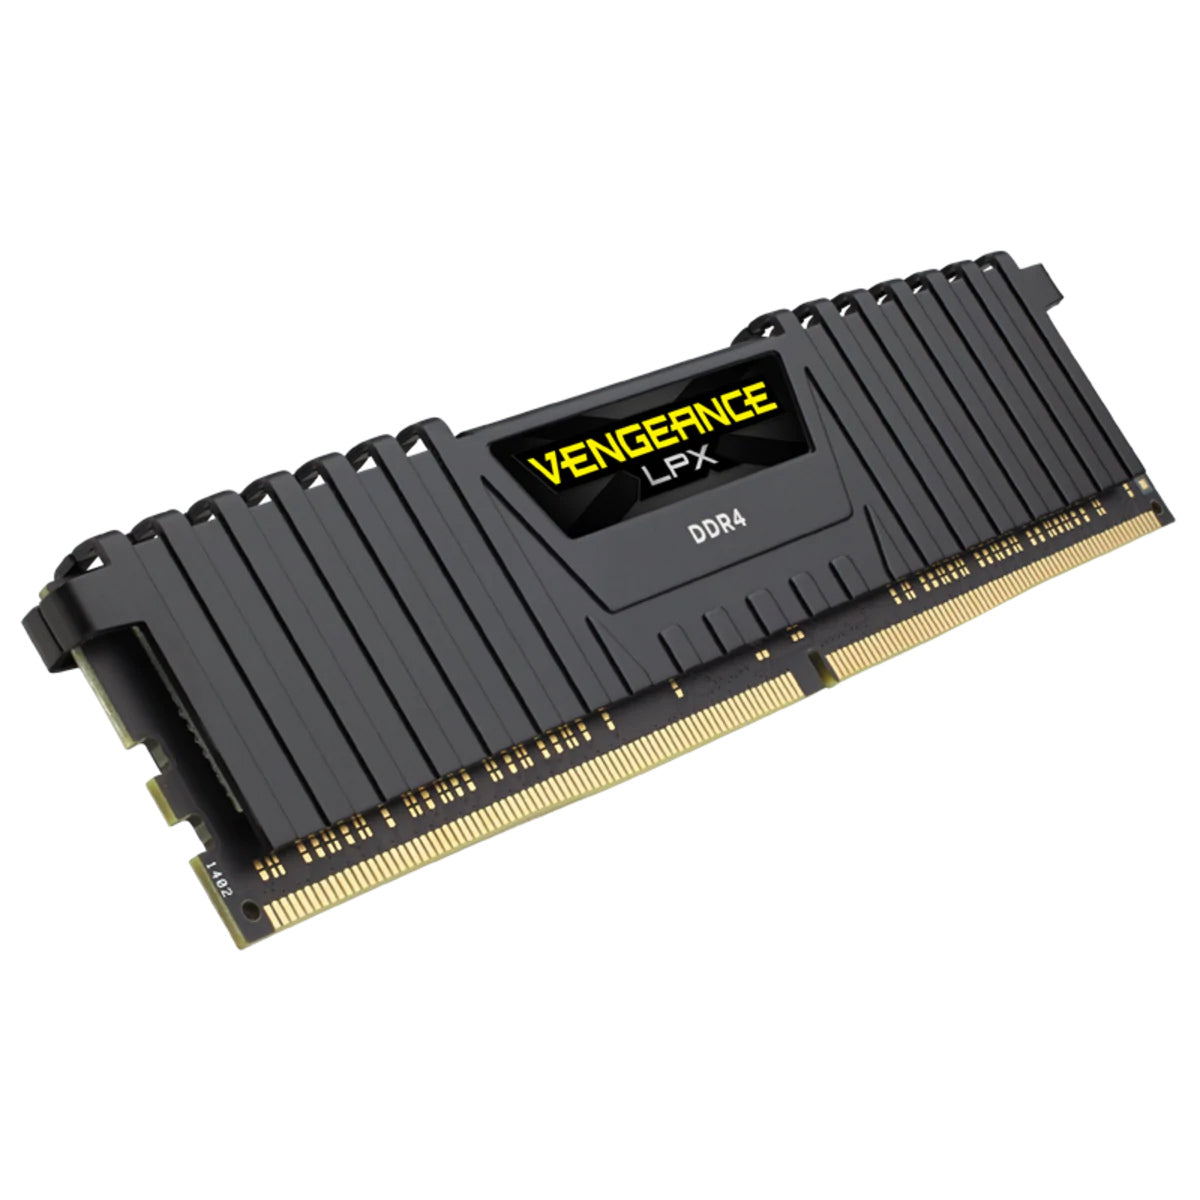 Corsair Vengeance LPX RAM 3600MHz DDR4 डेस्कटॉप मेमोरी